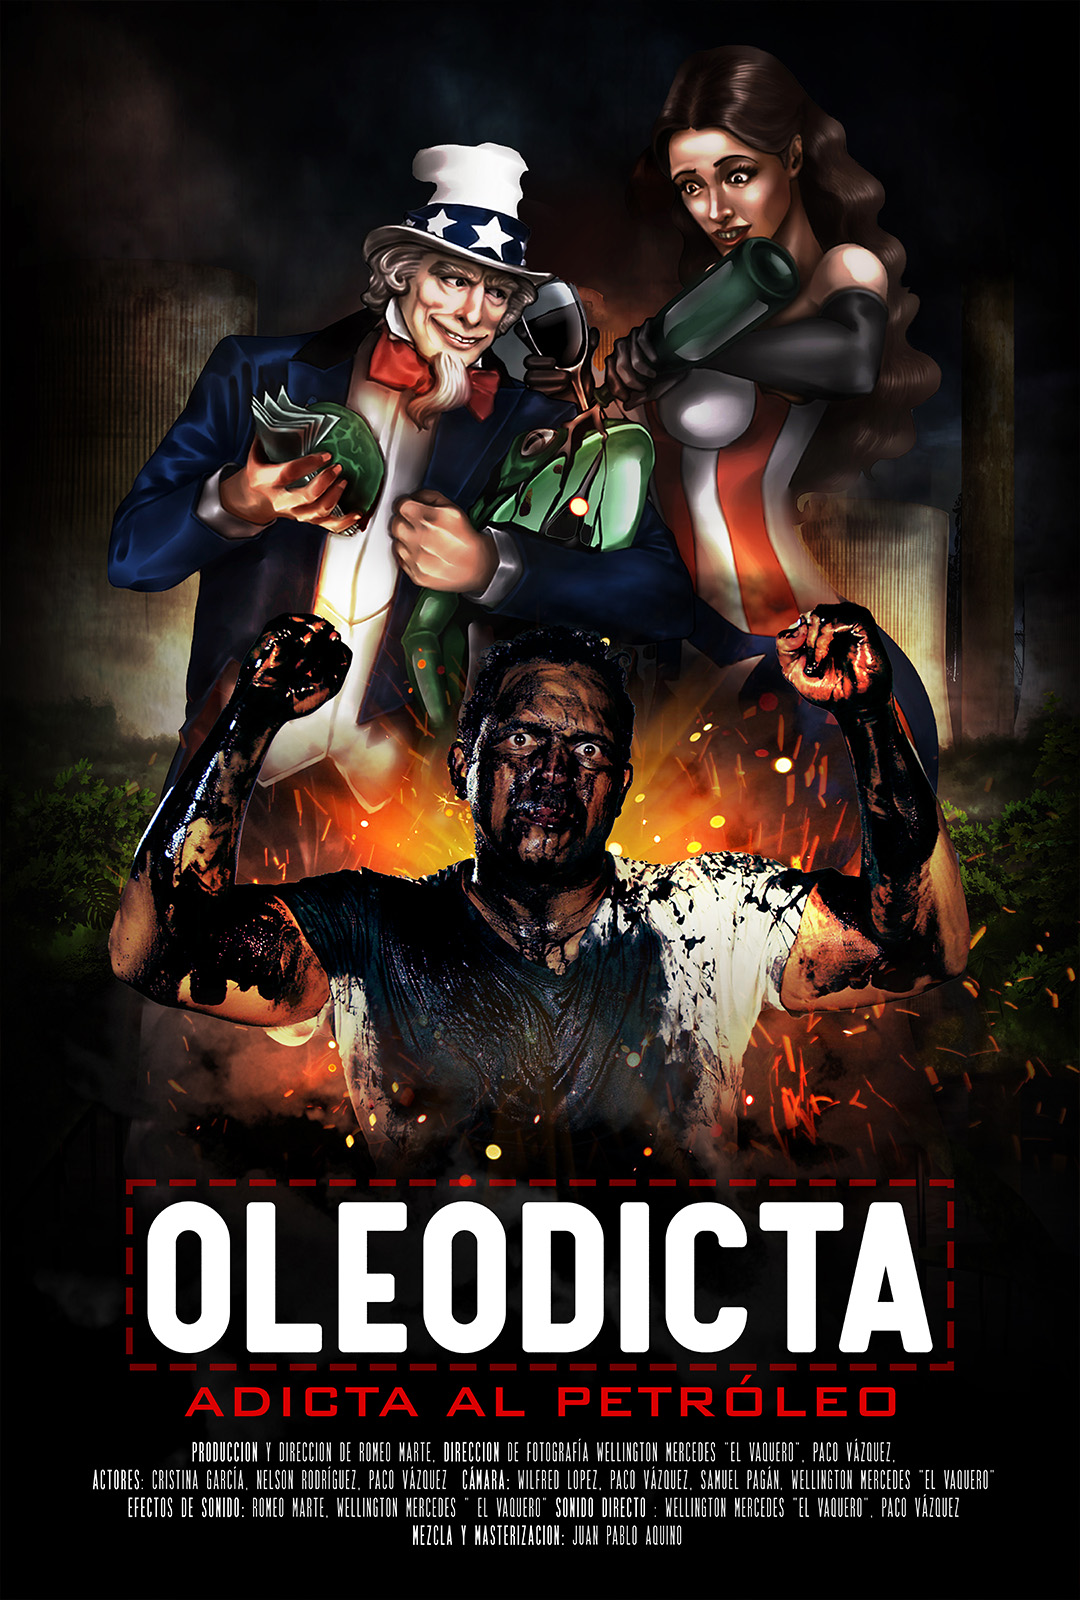 Movie Poster: Oleodicta